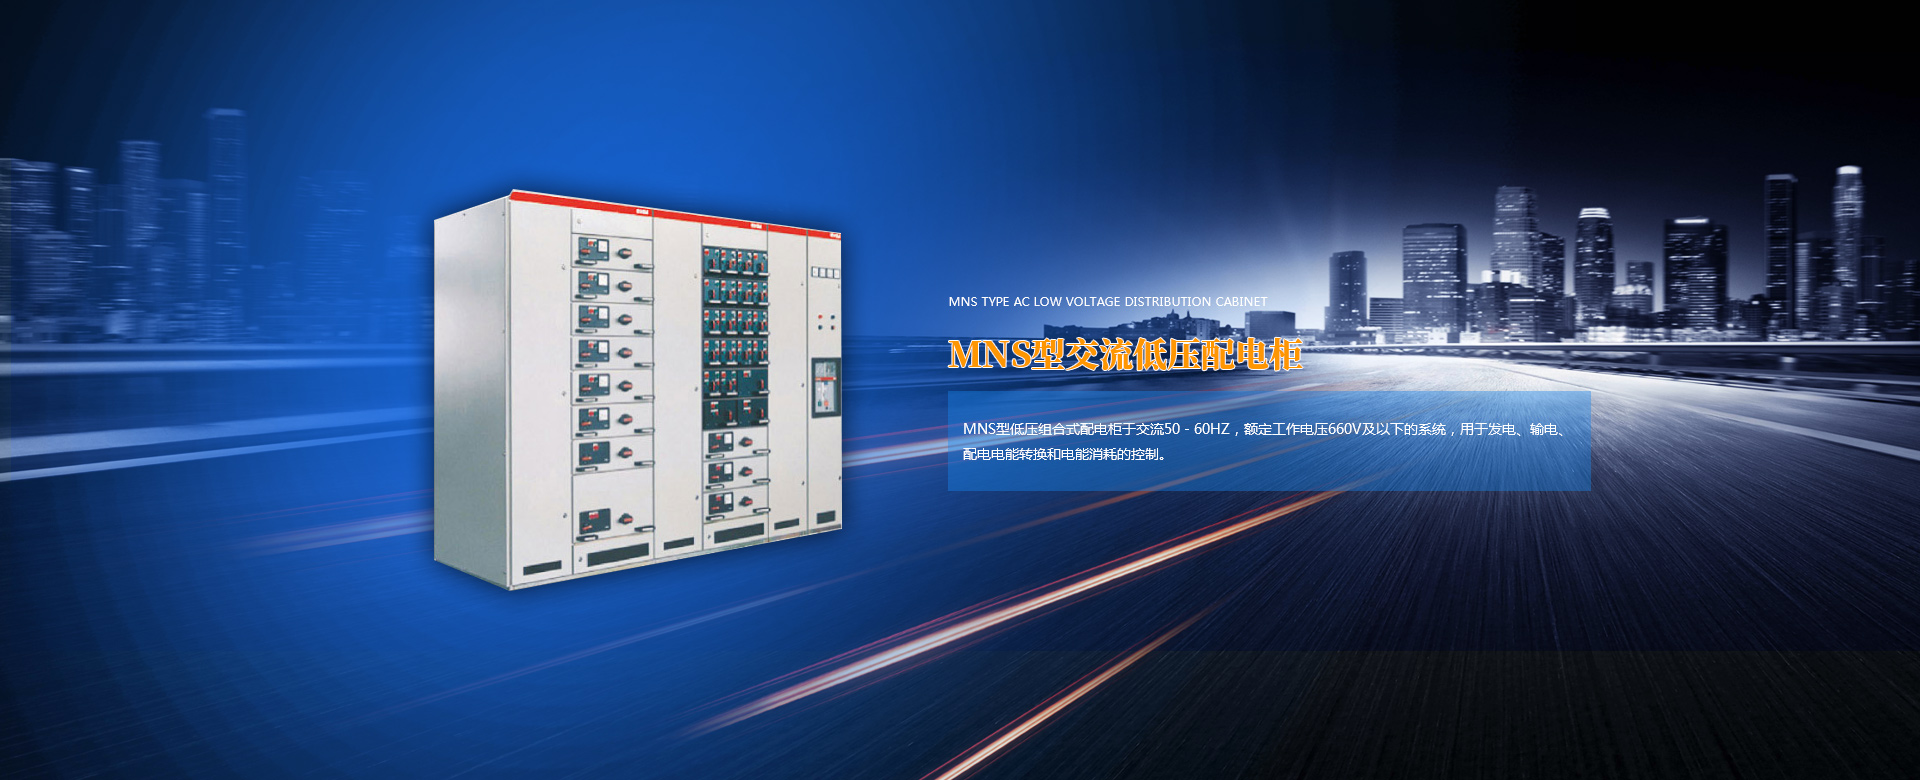 MNS型交流低压配电柜 